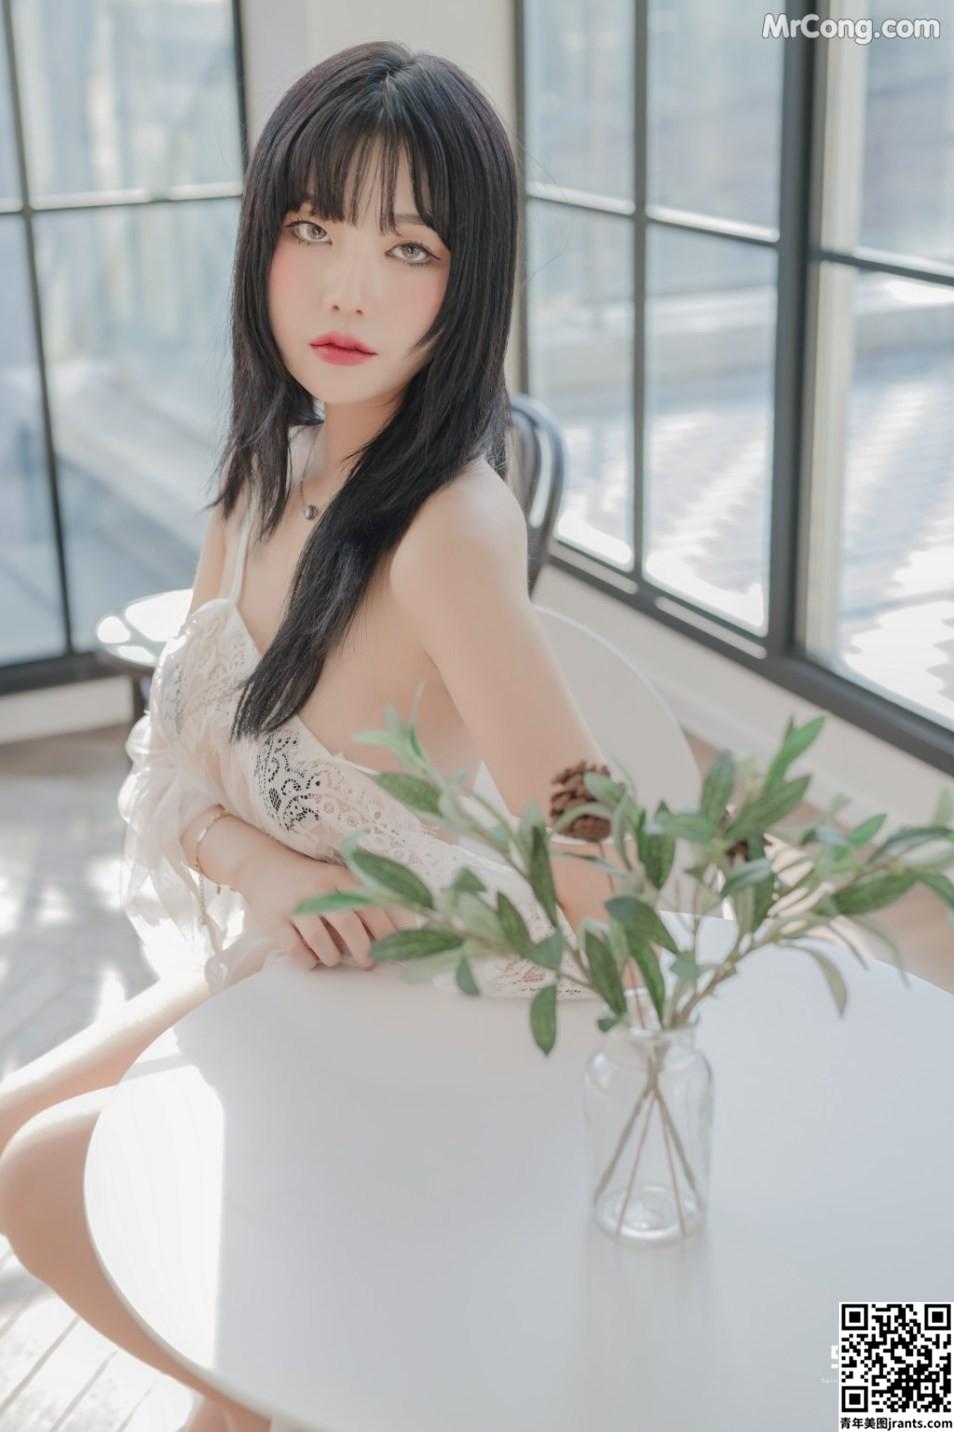 SAINT Photolife – Yuna – BLOOM VOL. 01 (52P)